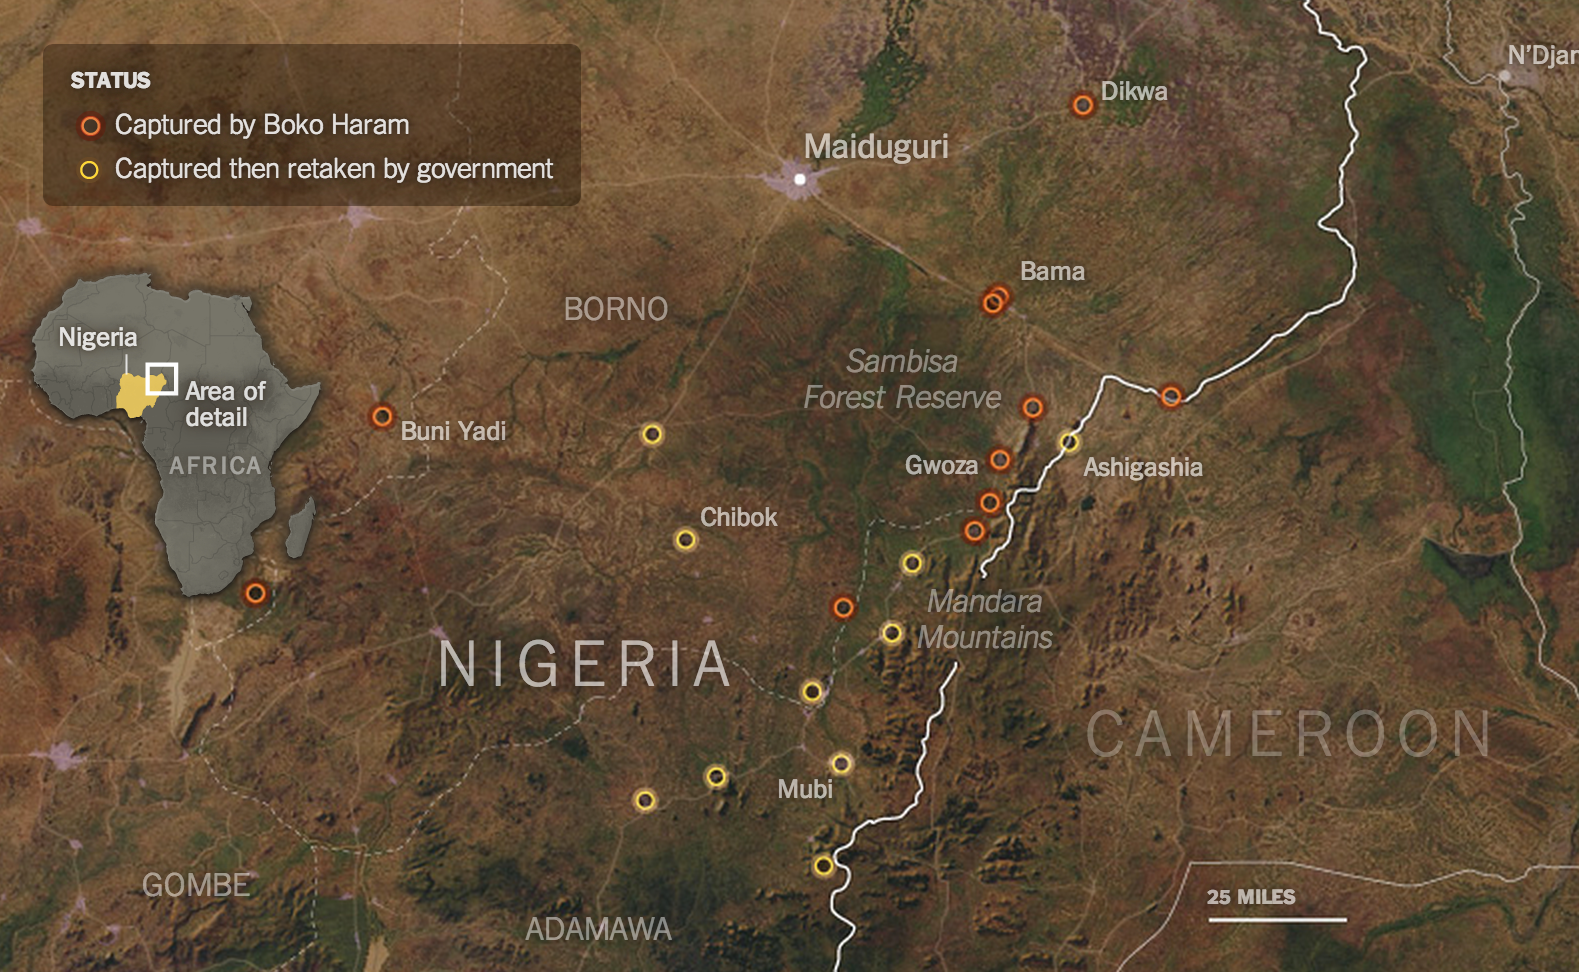 boko-haram-nigeria-terrorism-maps-1418279191613-superjumbo.png